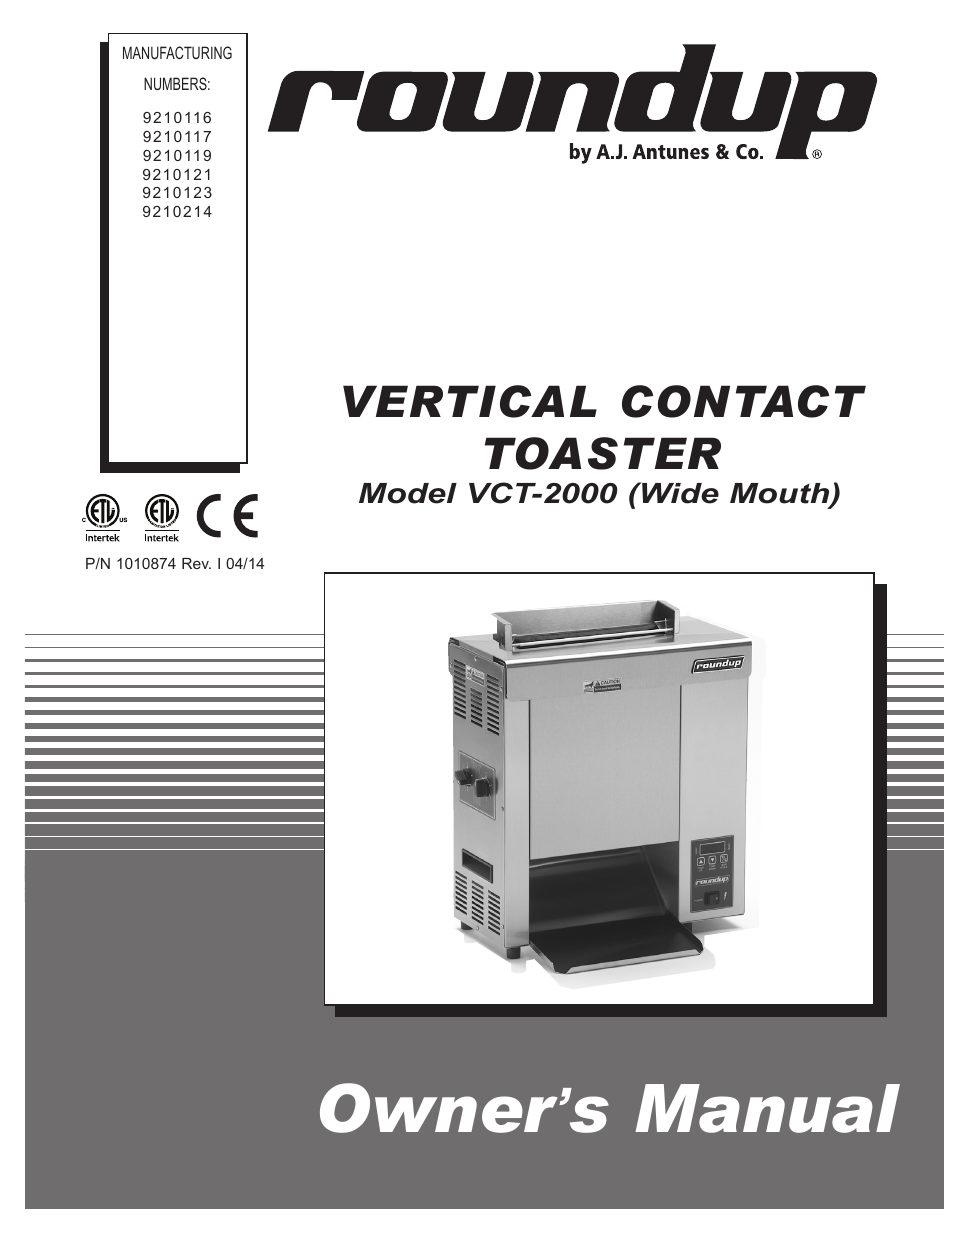 VCT-2000 9210121